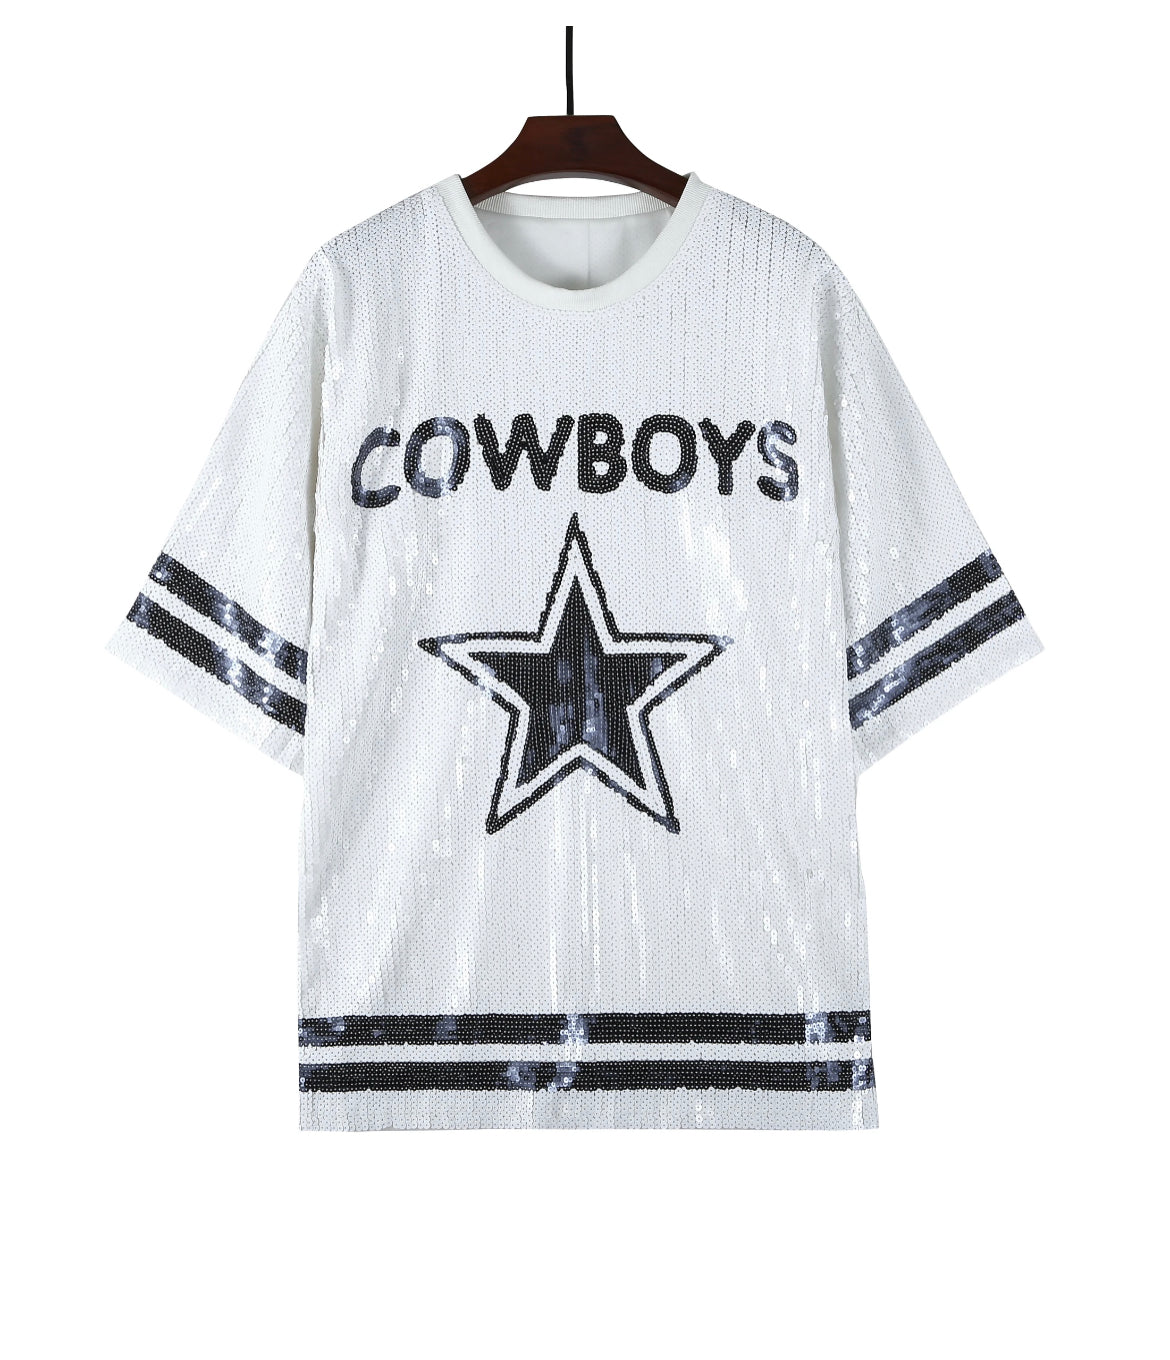 Dallas Cowboys White Sequin Top/ Dress